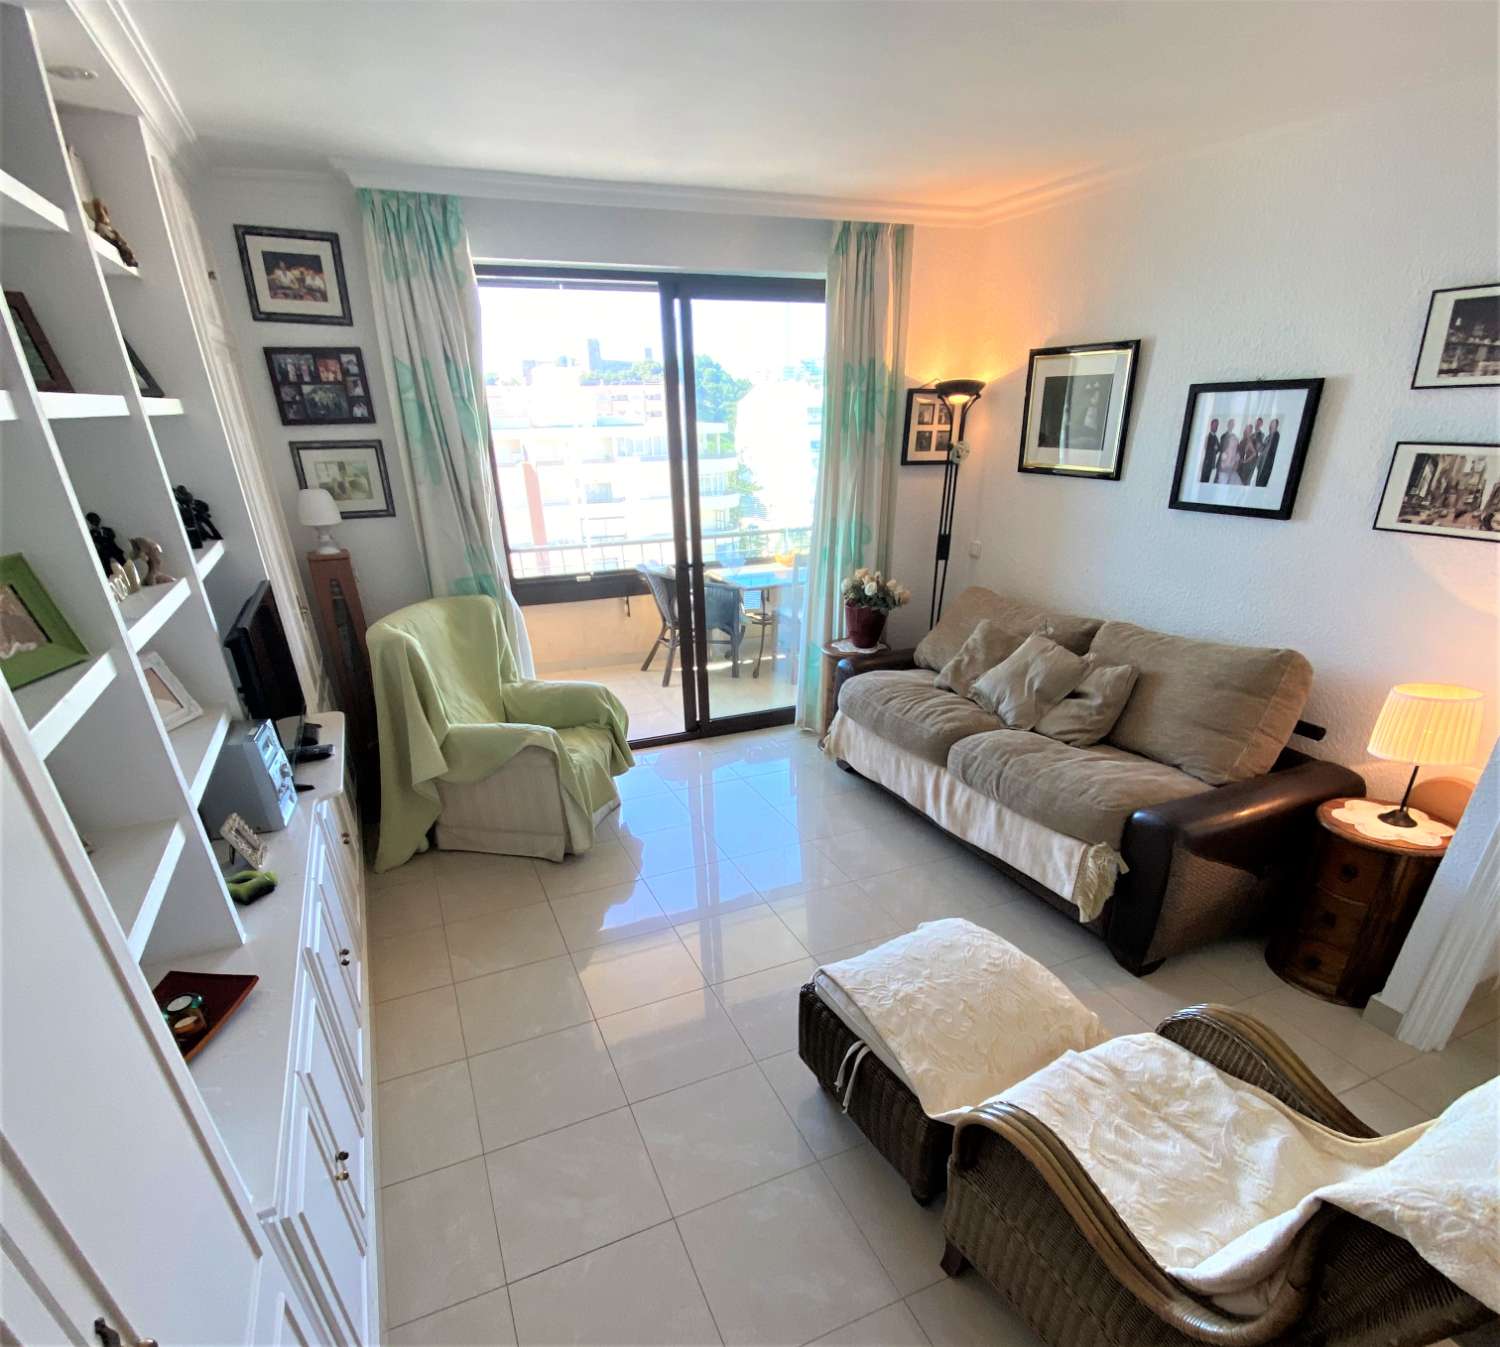 Fuengirola, 1 soveværelse, panoramaudsigt, Gratis Wi-Fi, swimmingpool, førstelinje strand.